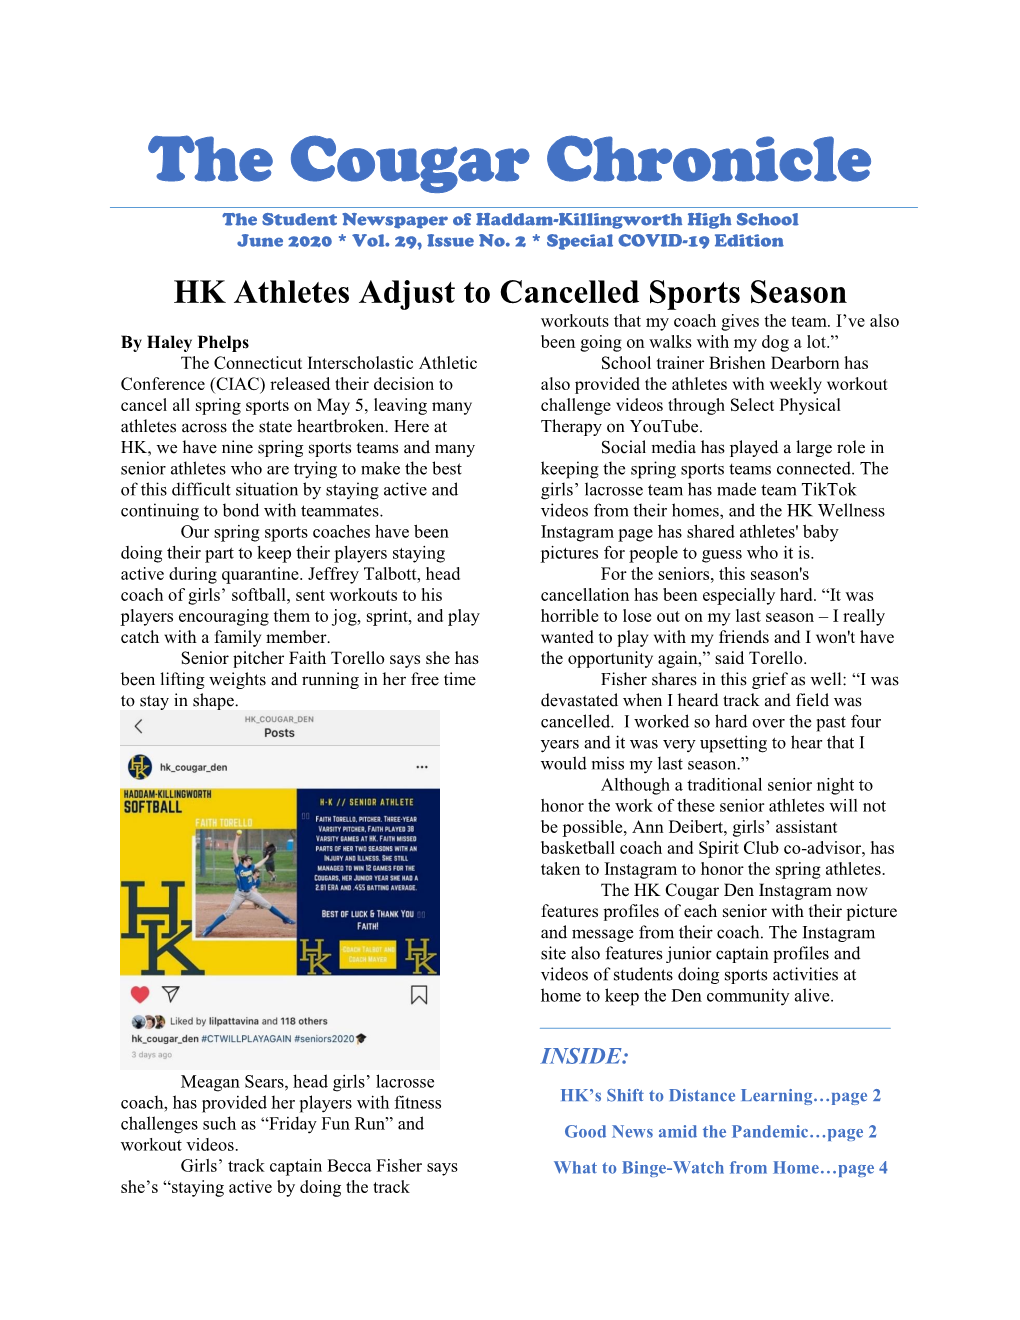 The Cougar Chronicle the Student Newspaper of Haddam-Killingworth High School June 2020 * Vol